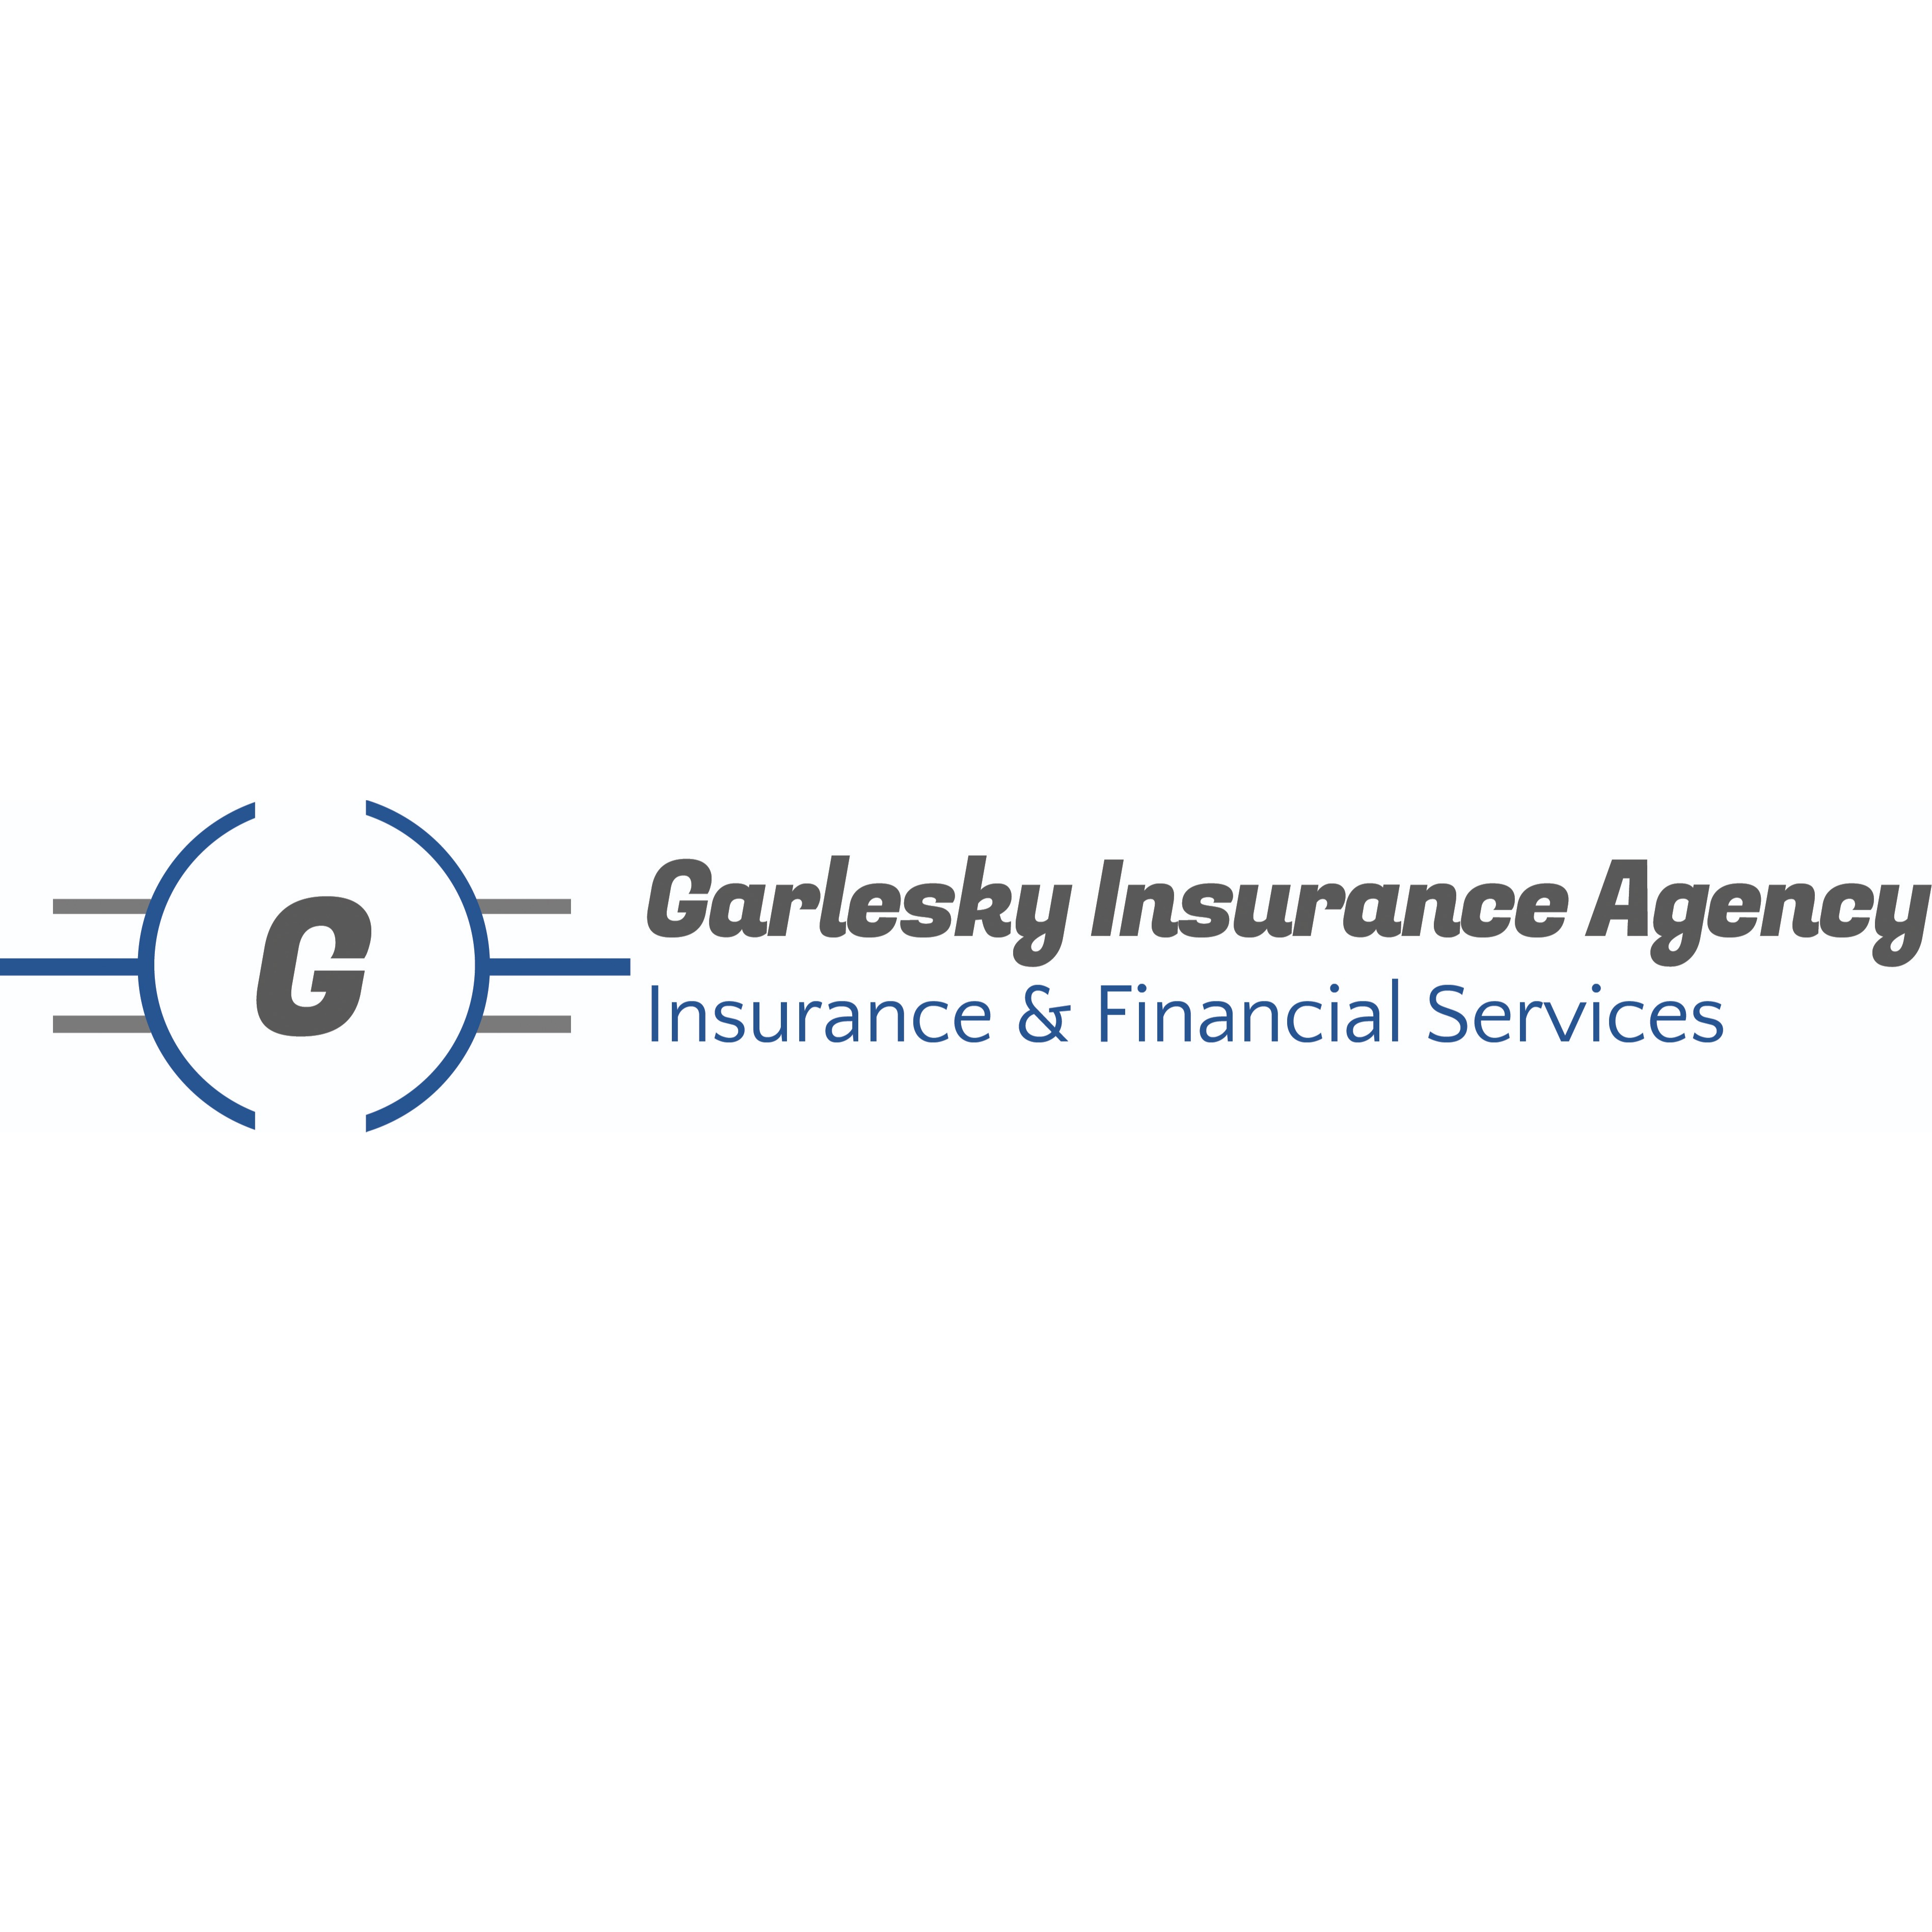 Garlesky Insurance Agency - Insurance & Financial Services